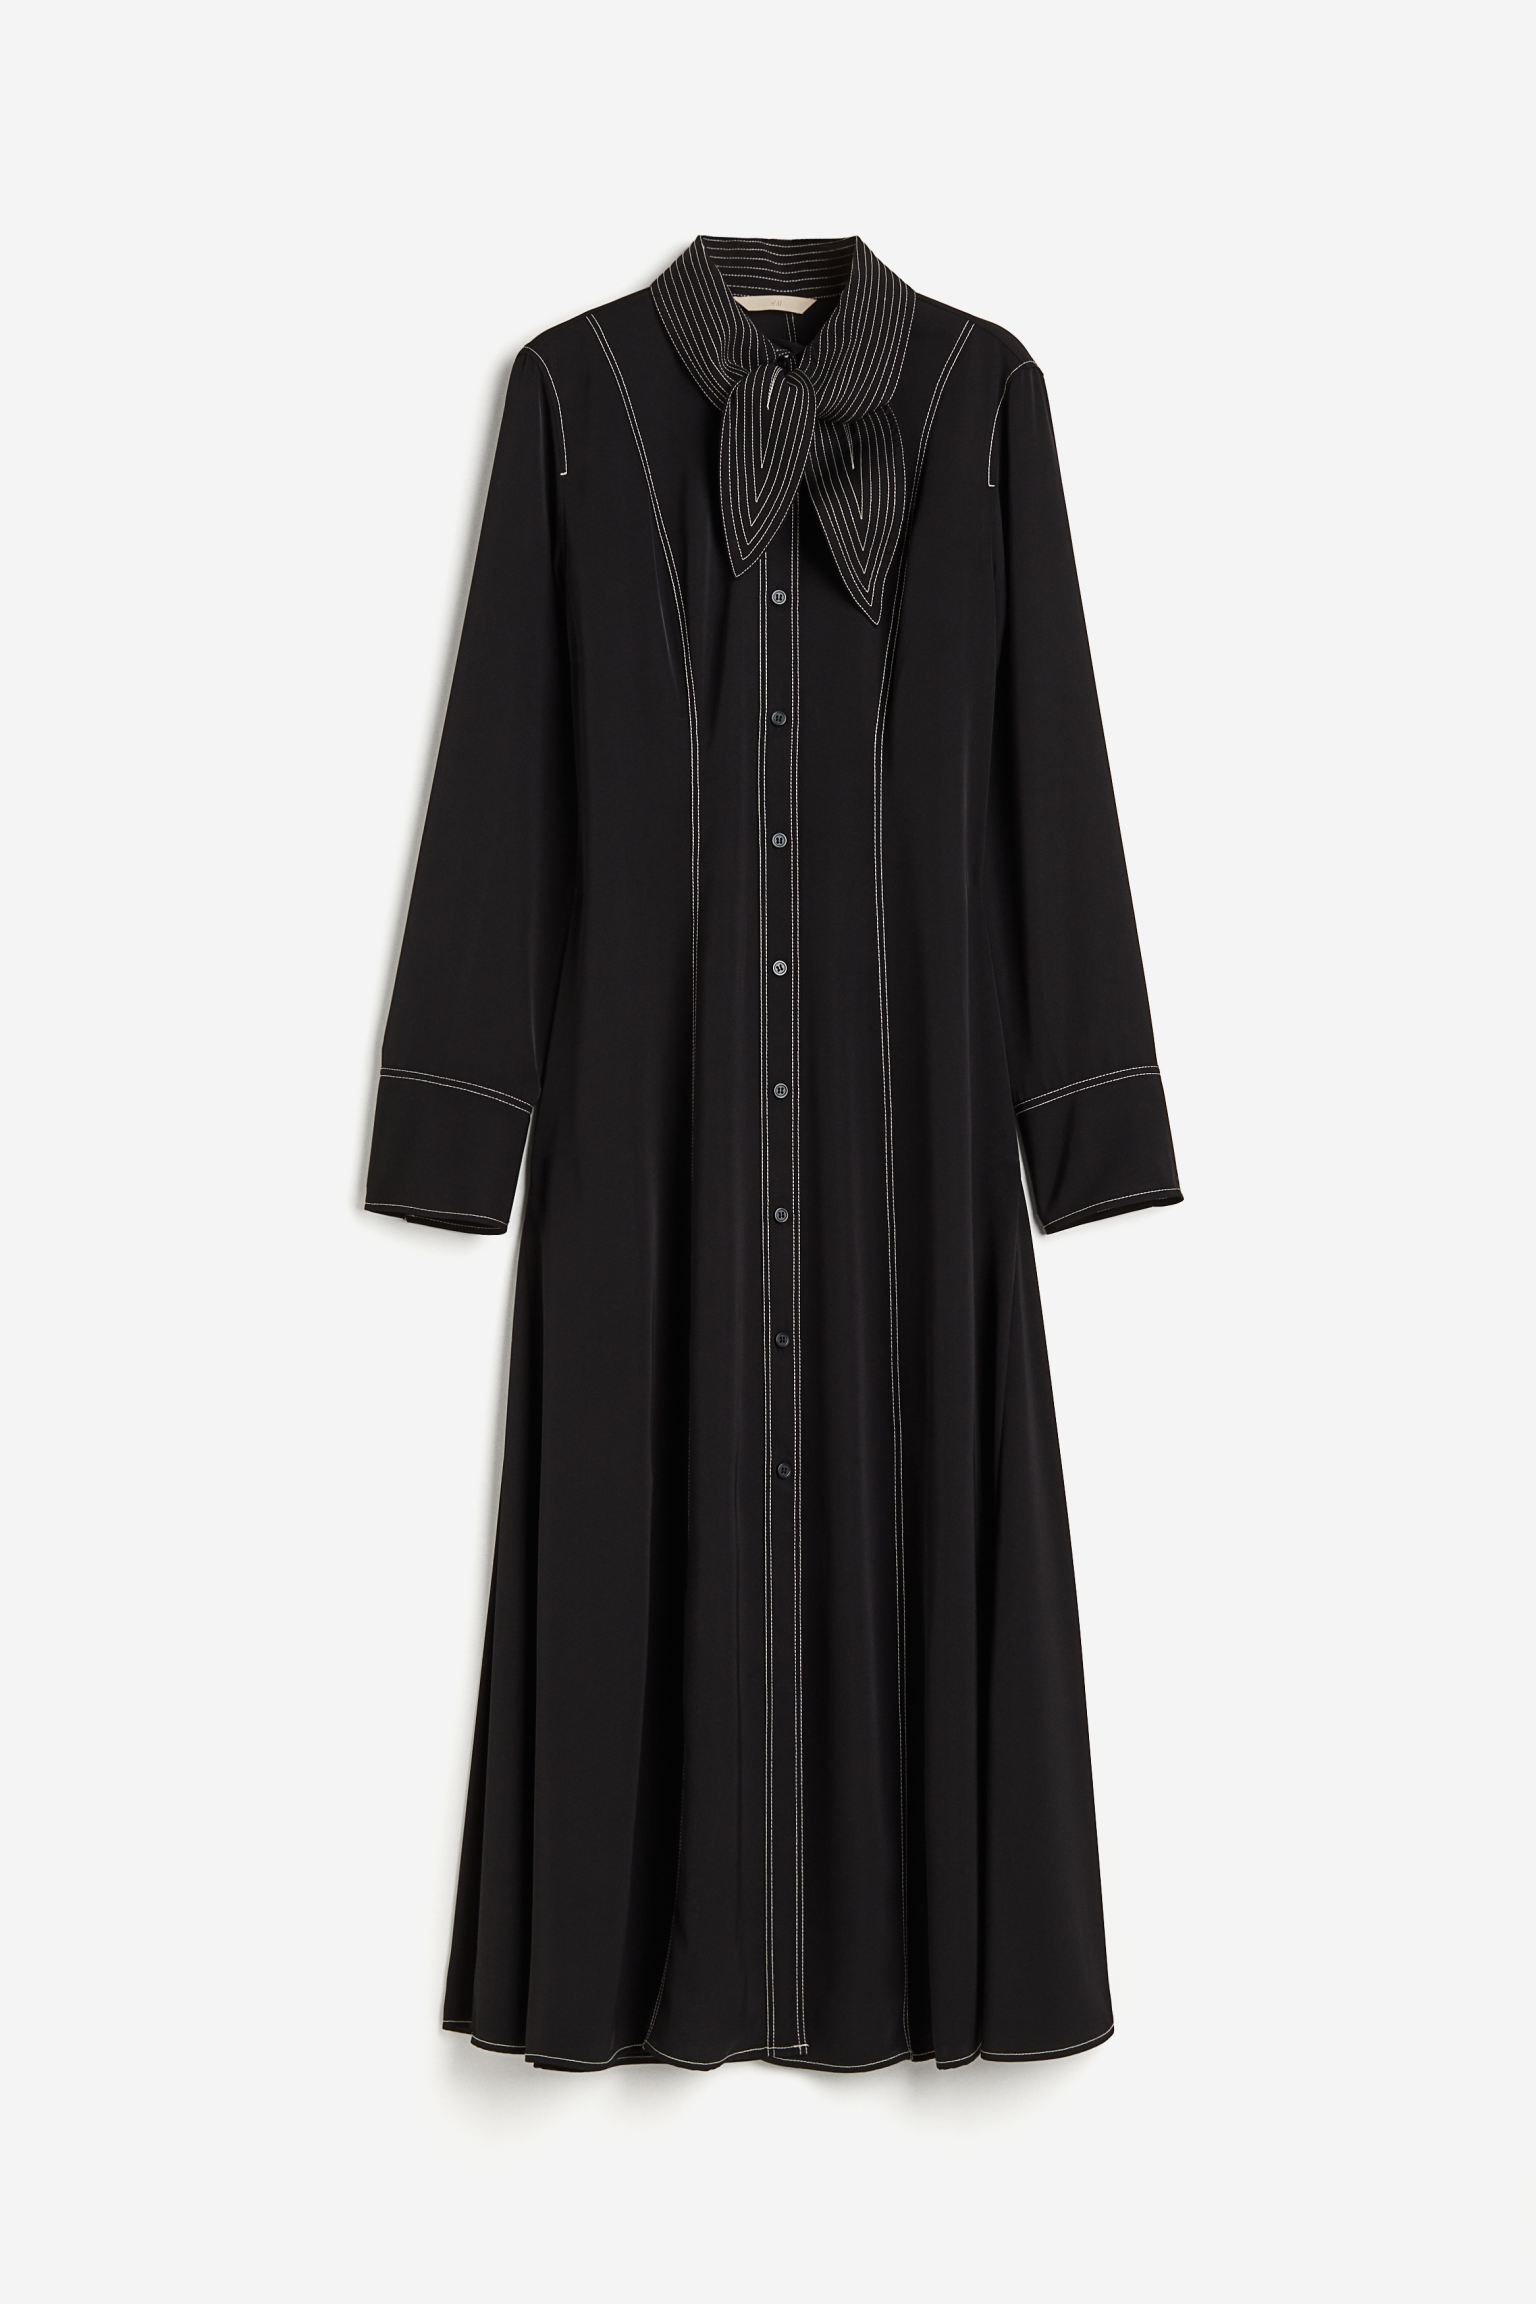 Платье H&M Twill With Scarf Collar, черный рубашка zara with scarf collar черный